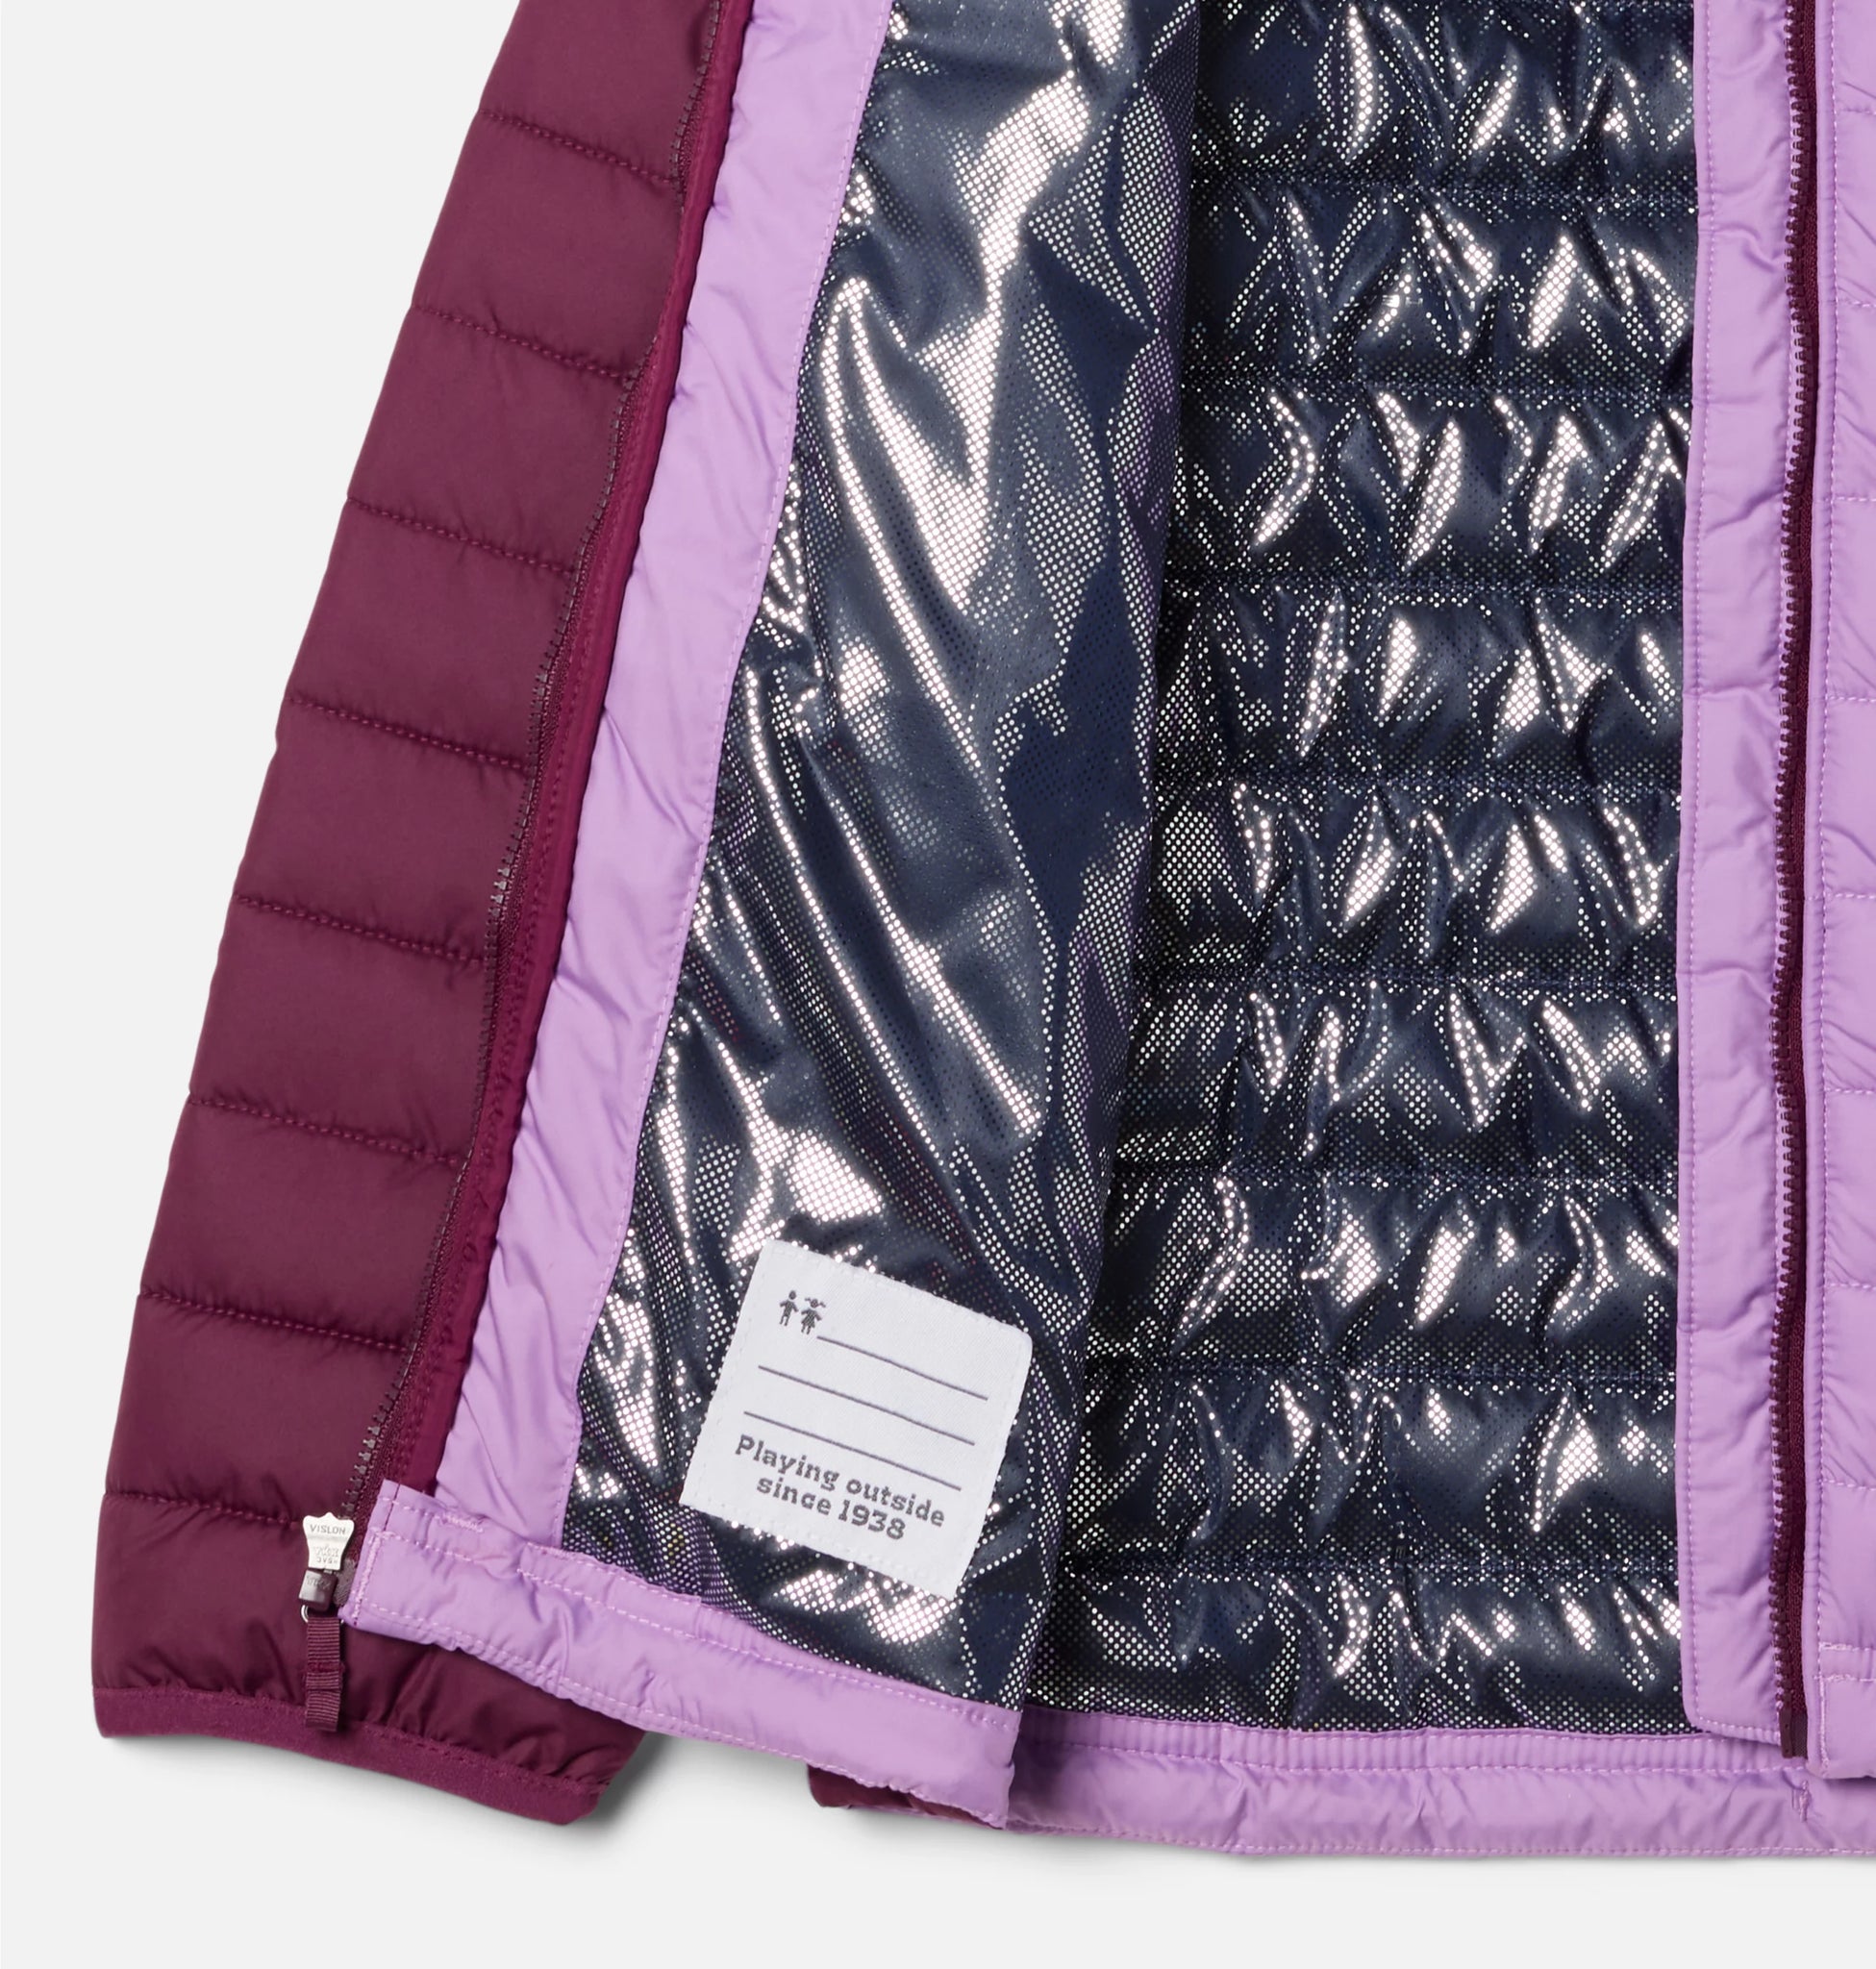 Kurtka ocieplana Columbia Girls’ Powder Lite™ Hooded Jacket